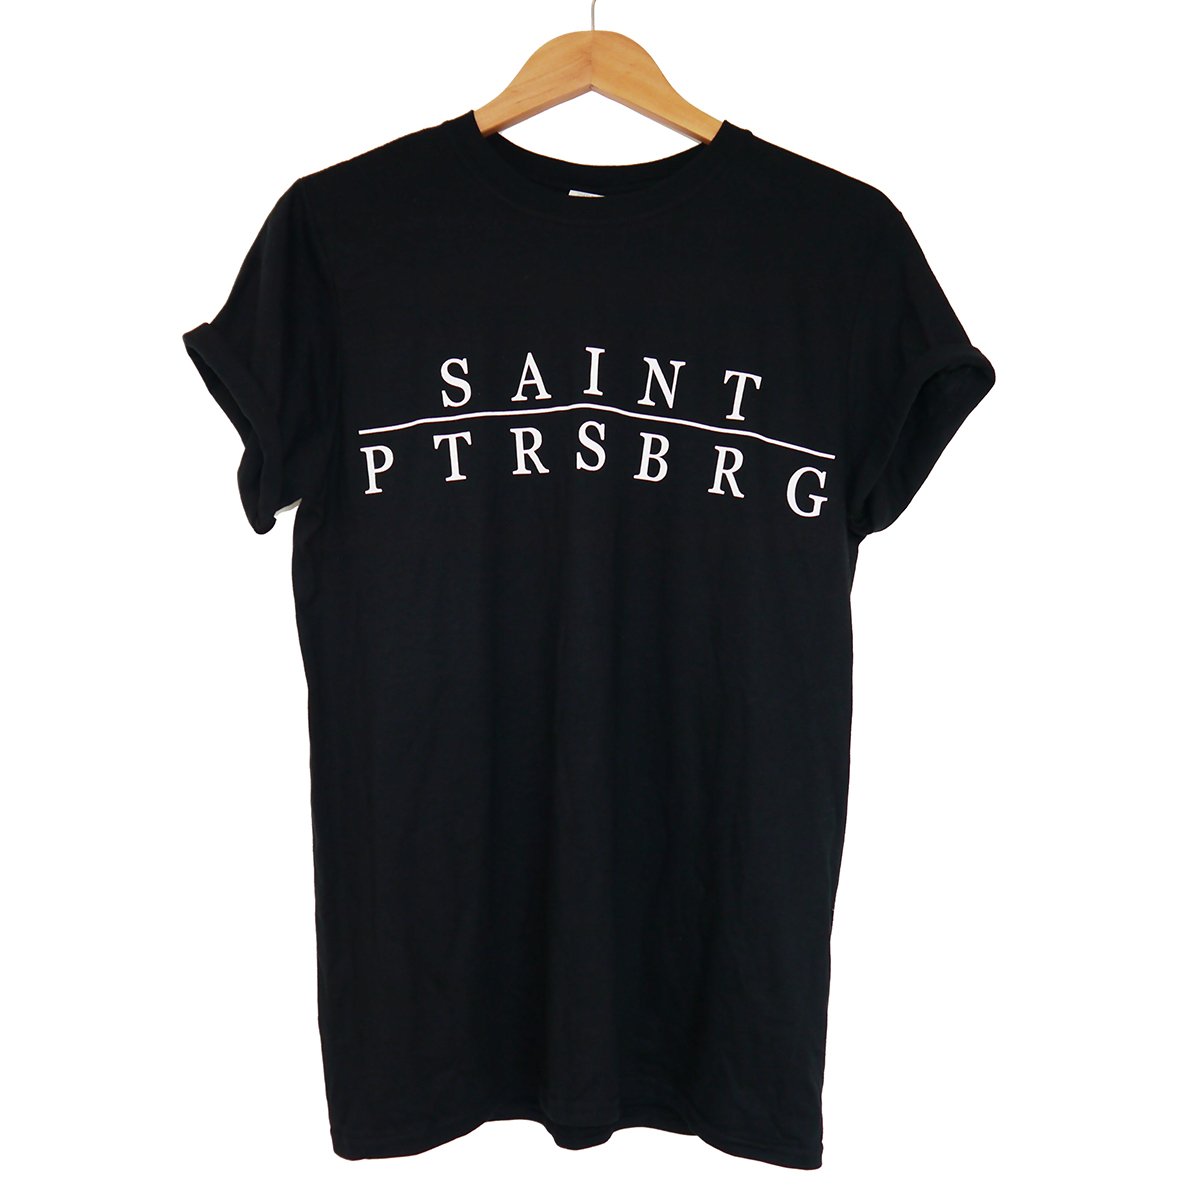 Image of SAINT PTRSBRG T-shirt - Black